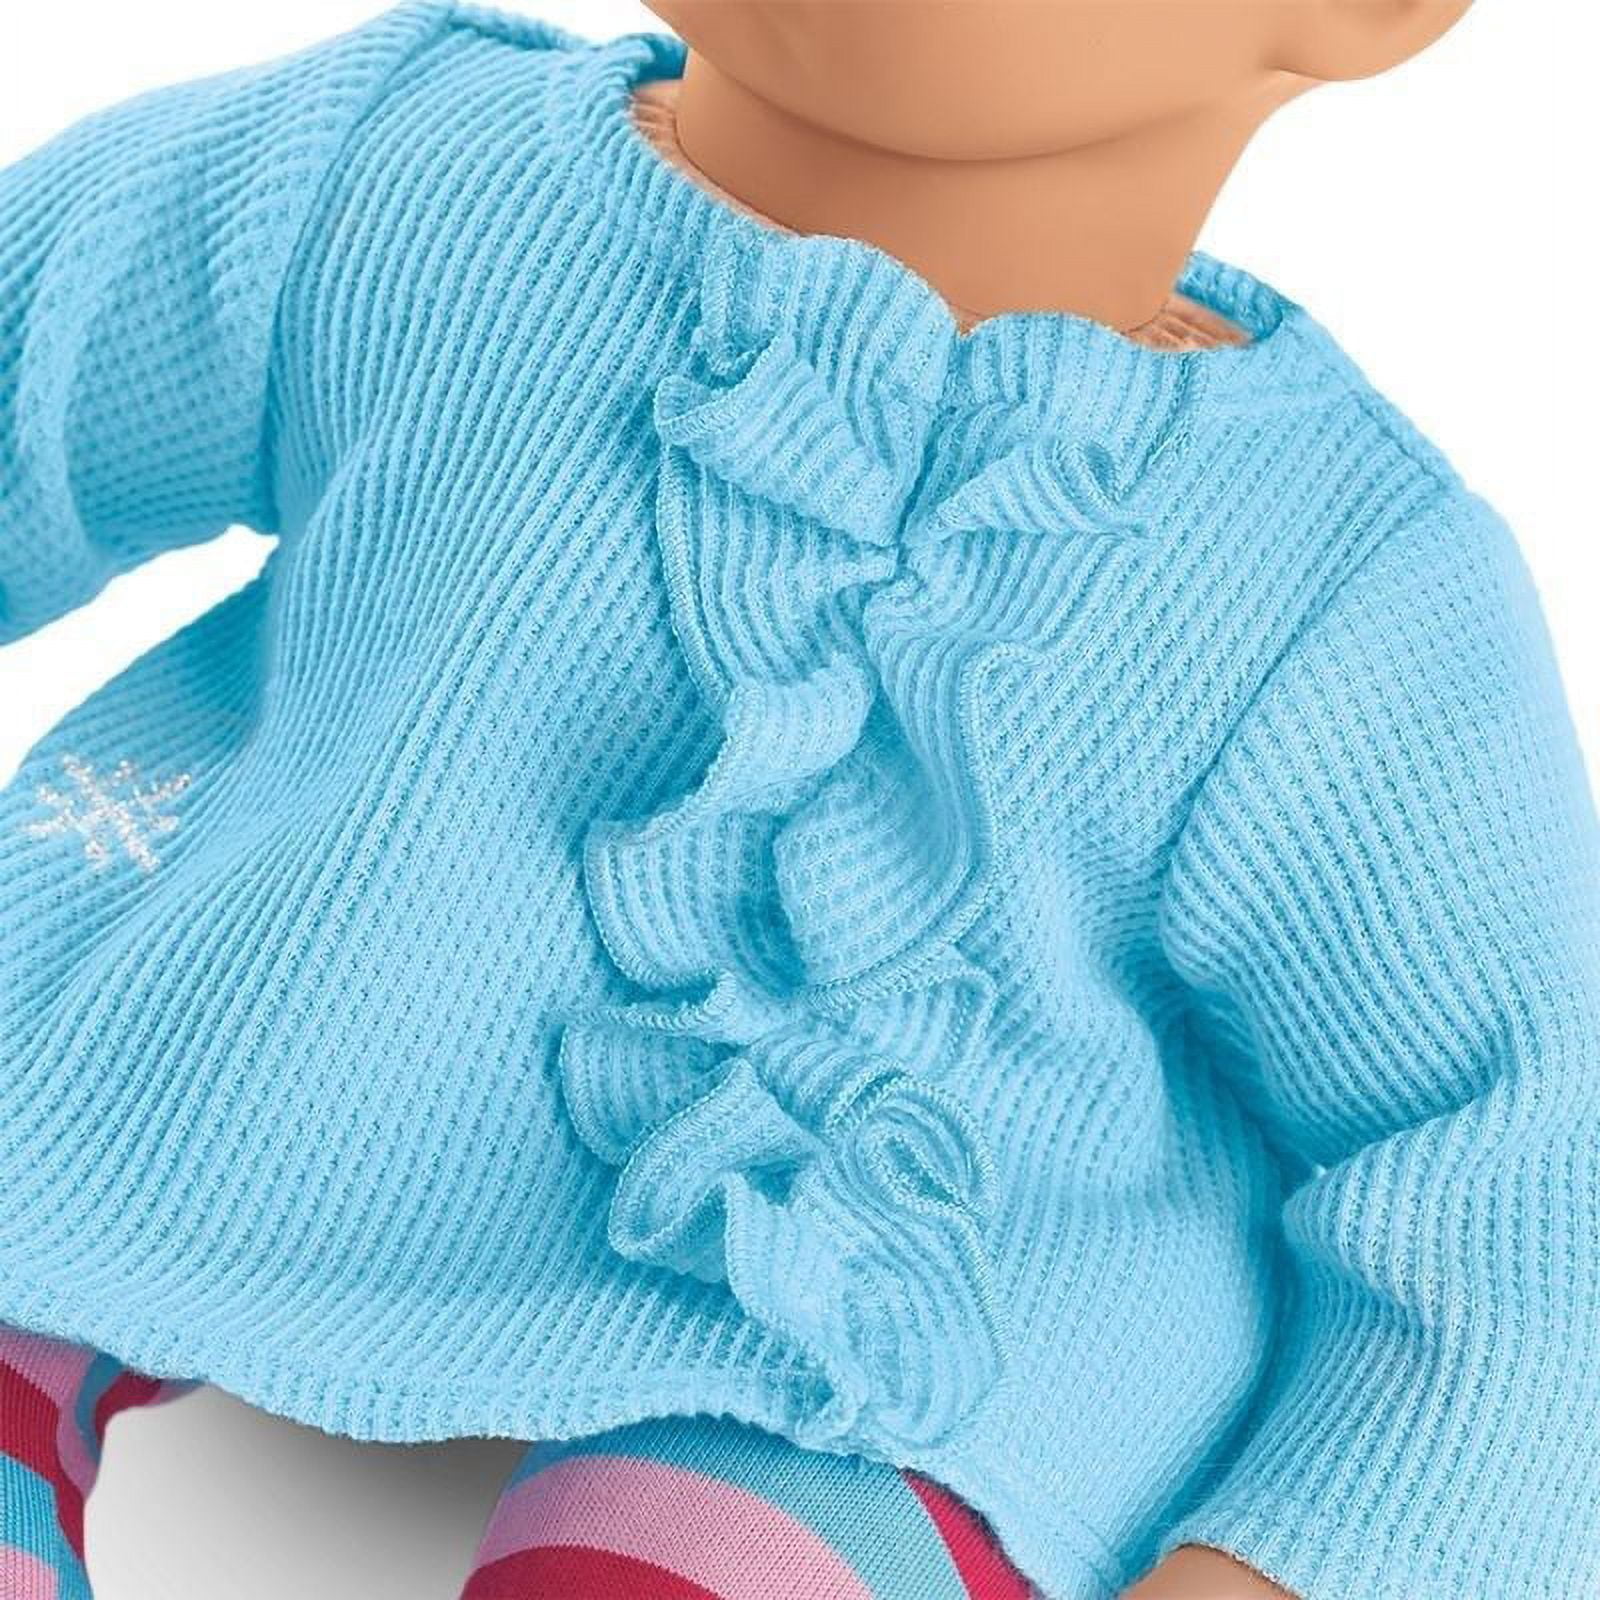 Ivy in Penguin Pjs  American girl doll pajamas, American girl